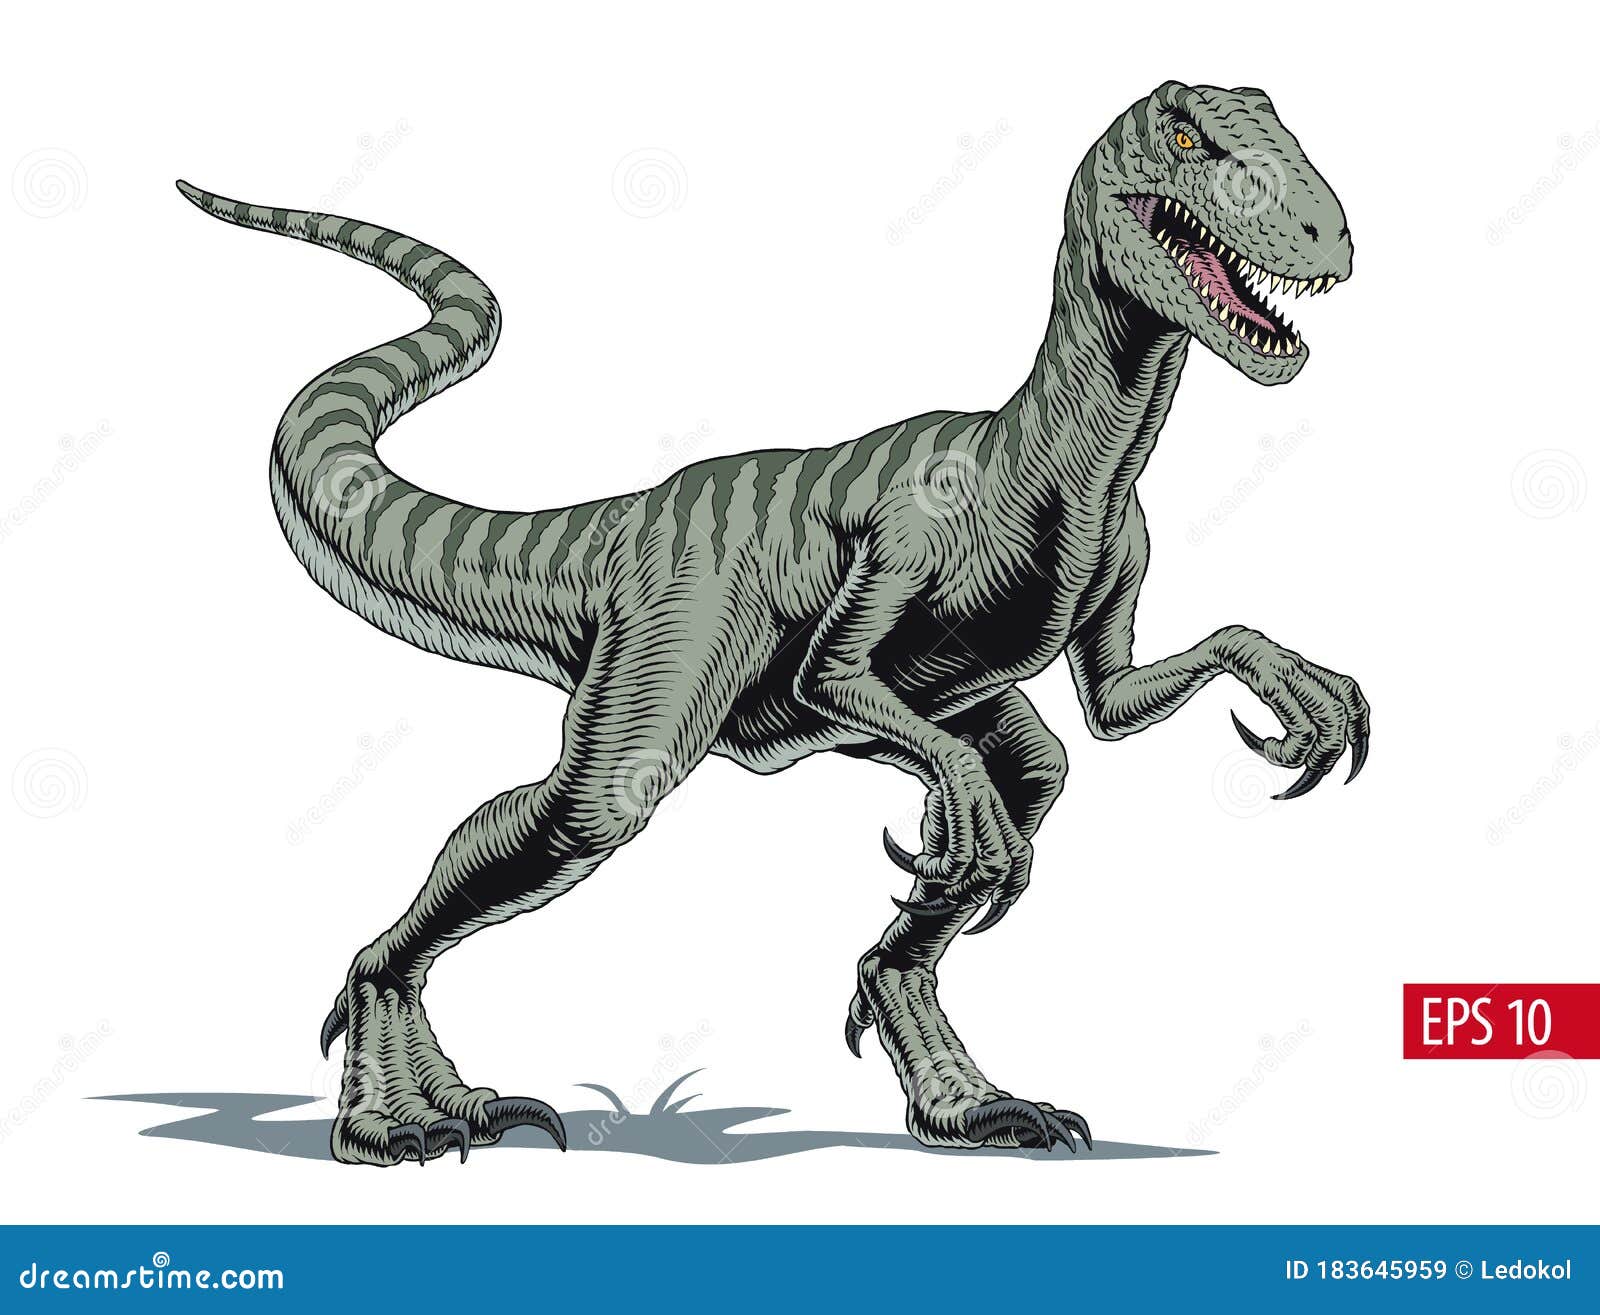 velociraptor dinosaur, comic style  